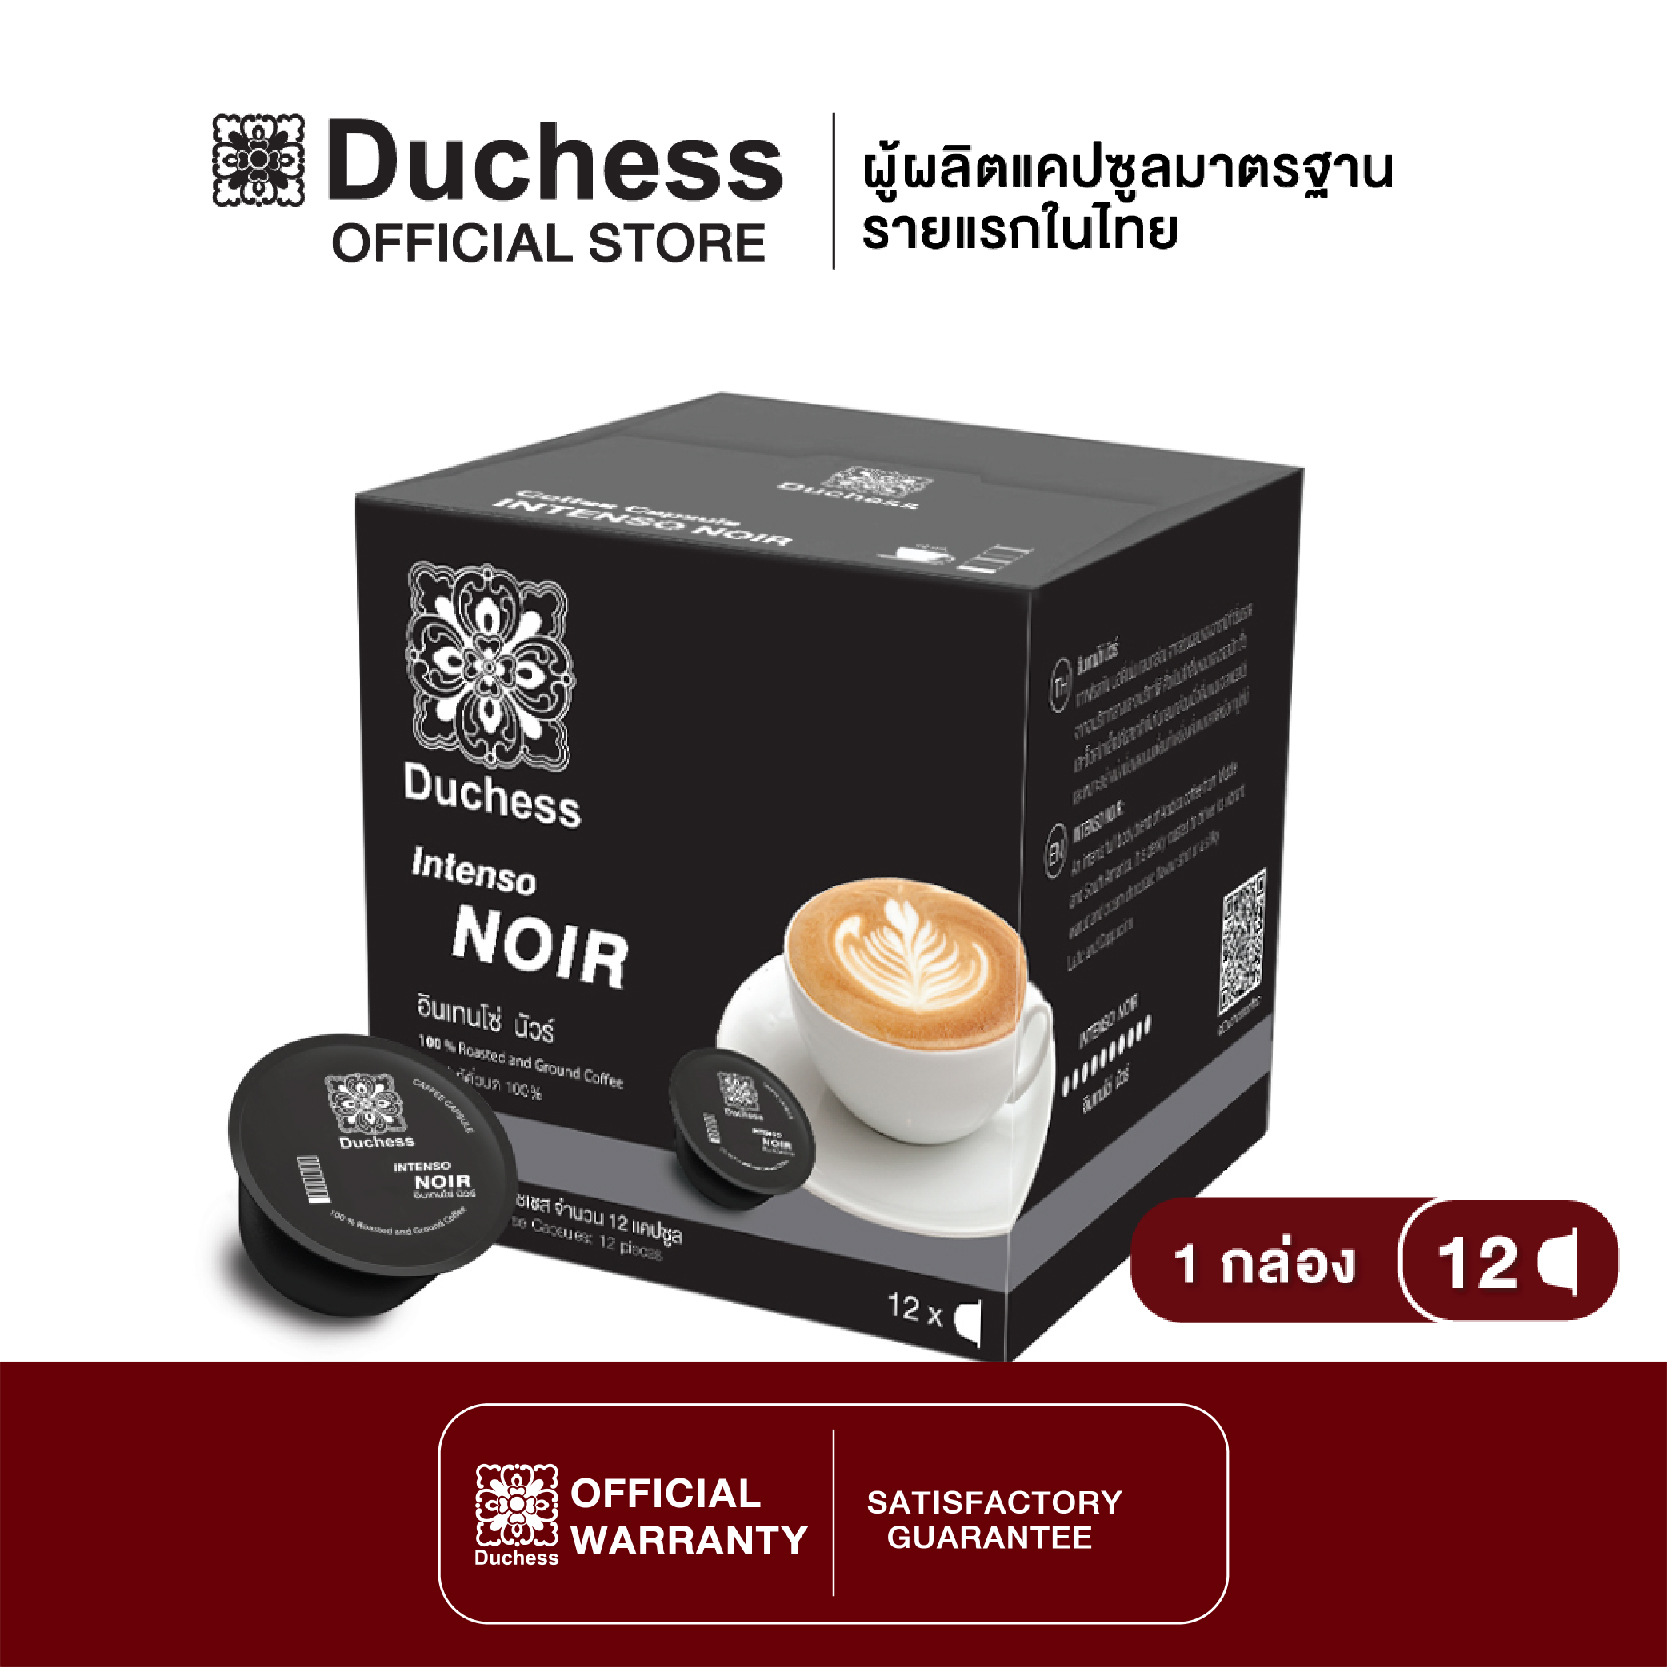 Duchess CO2004 - กาแฟแคปซูล 1 กล่อง (12 แคปซูล) - Intenso Noir (ใช้ได้กับ Nescafe Dolce Gusto เท่านั้น)